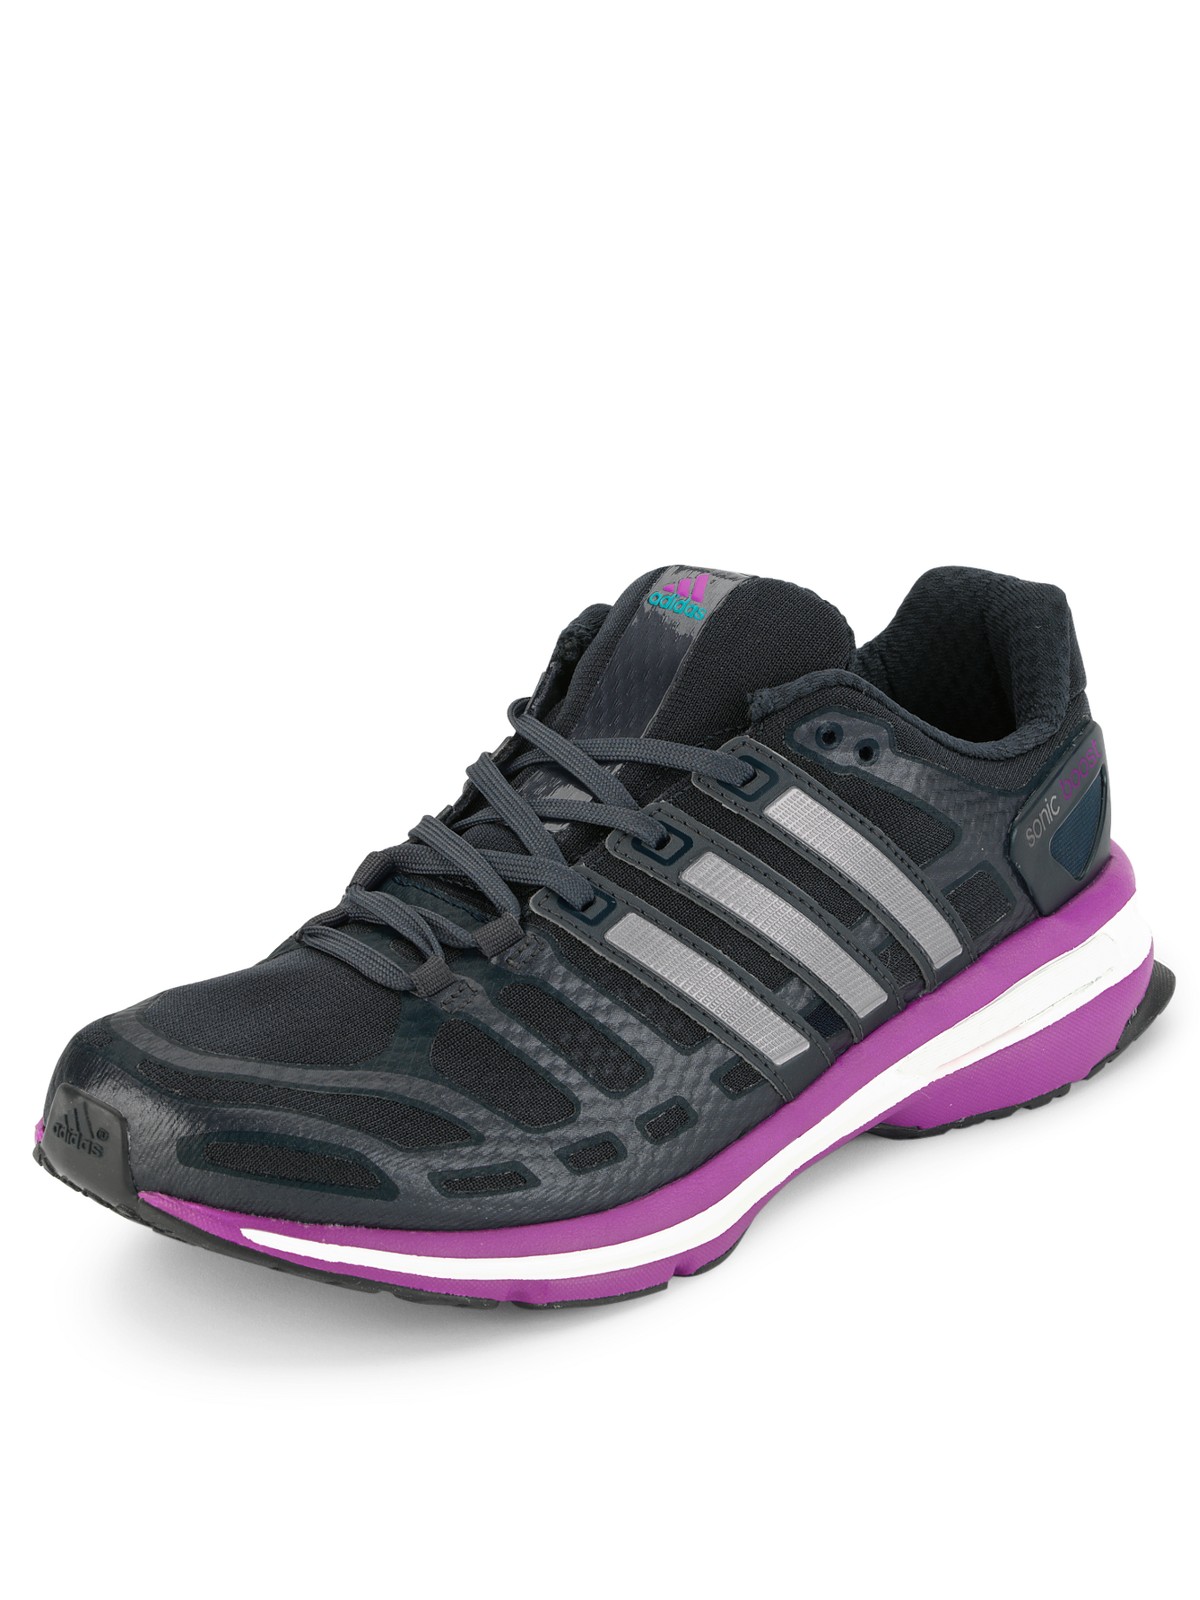 Adidas Sonic Boost Ladies Running Trainers in Purple (black/purple) | Lyst